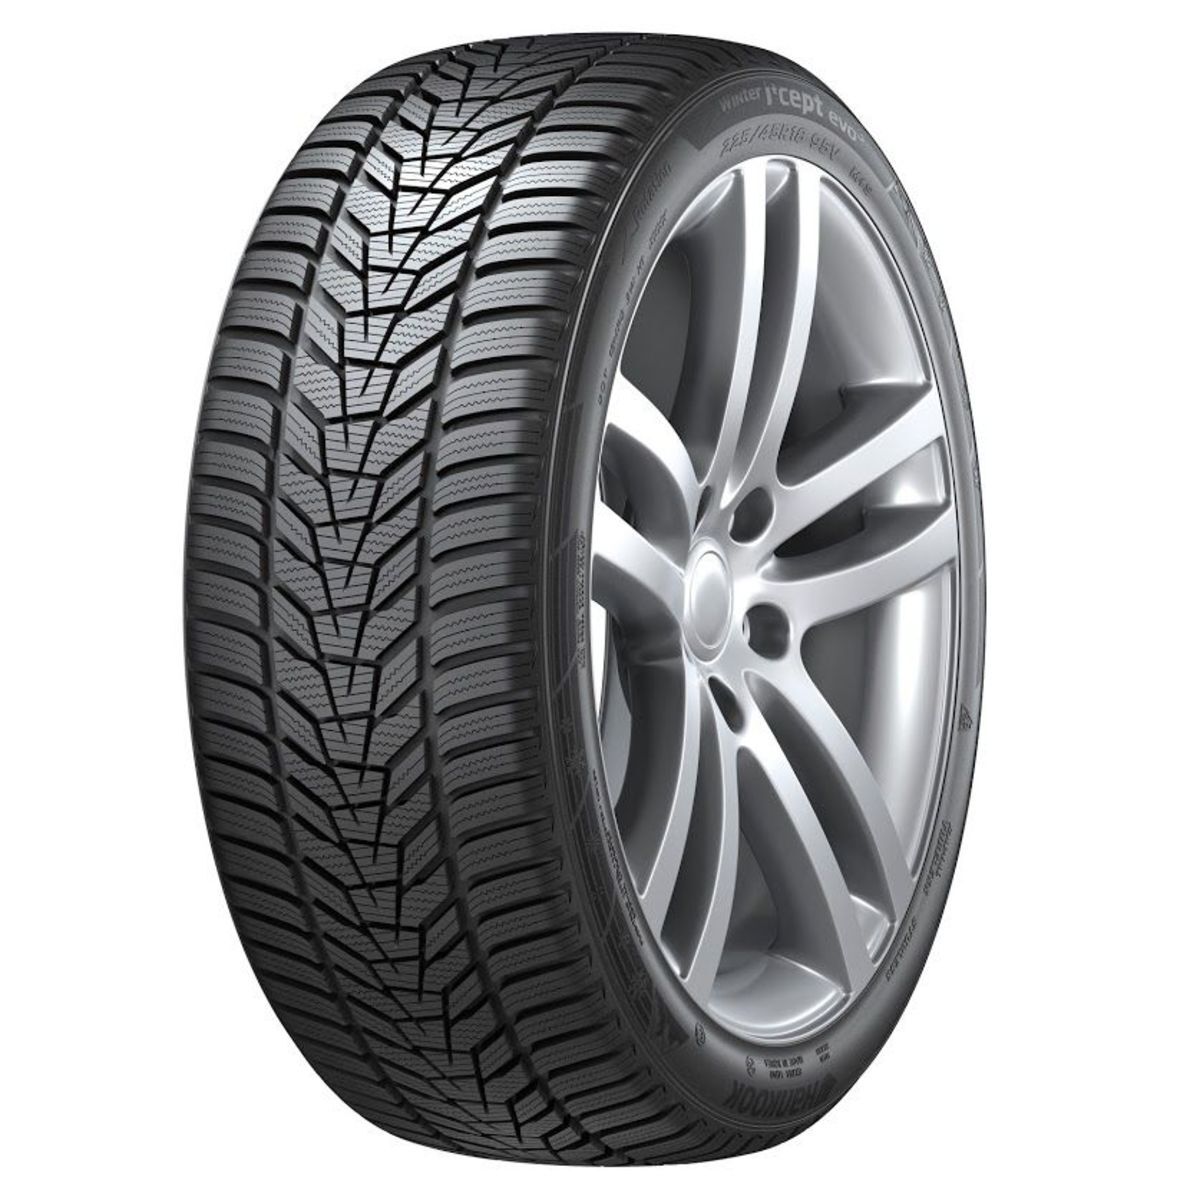 Neumáticos de invierno HANKOOK Winter i*cept evo3 W330 215/60R17 96H